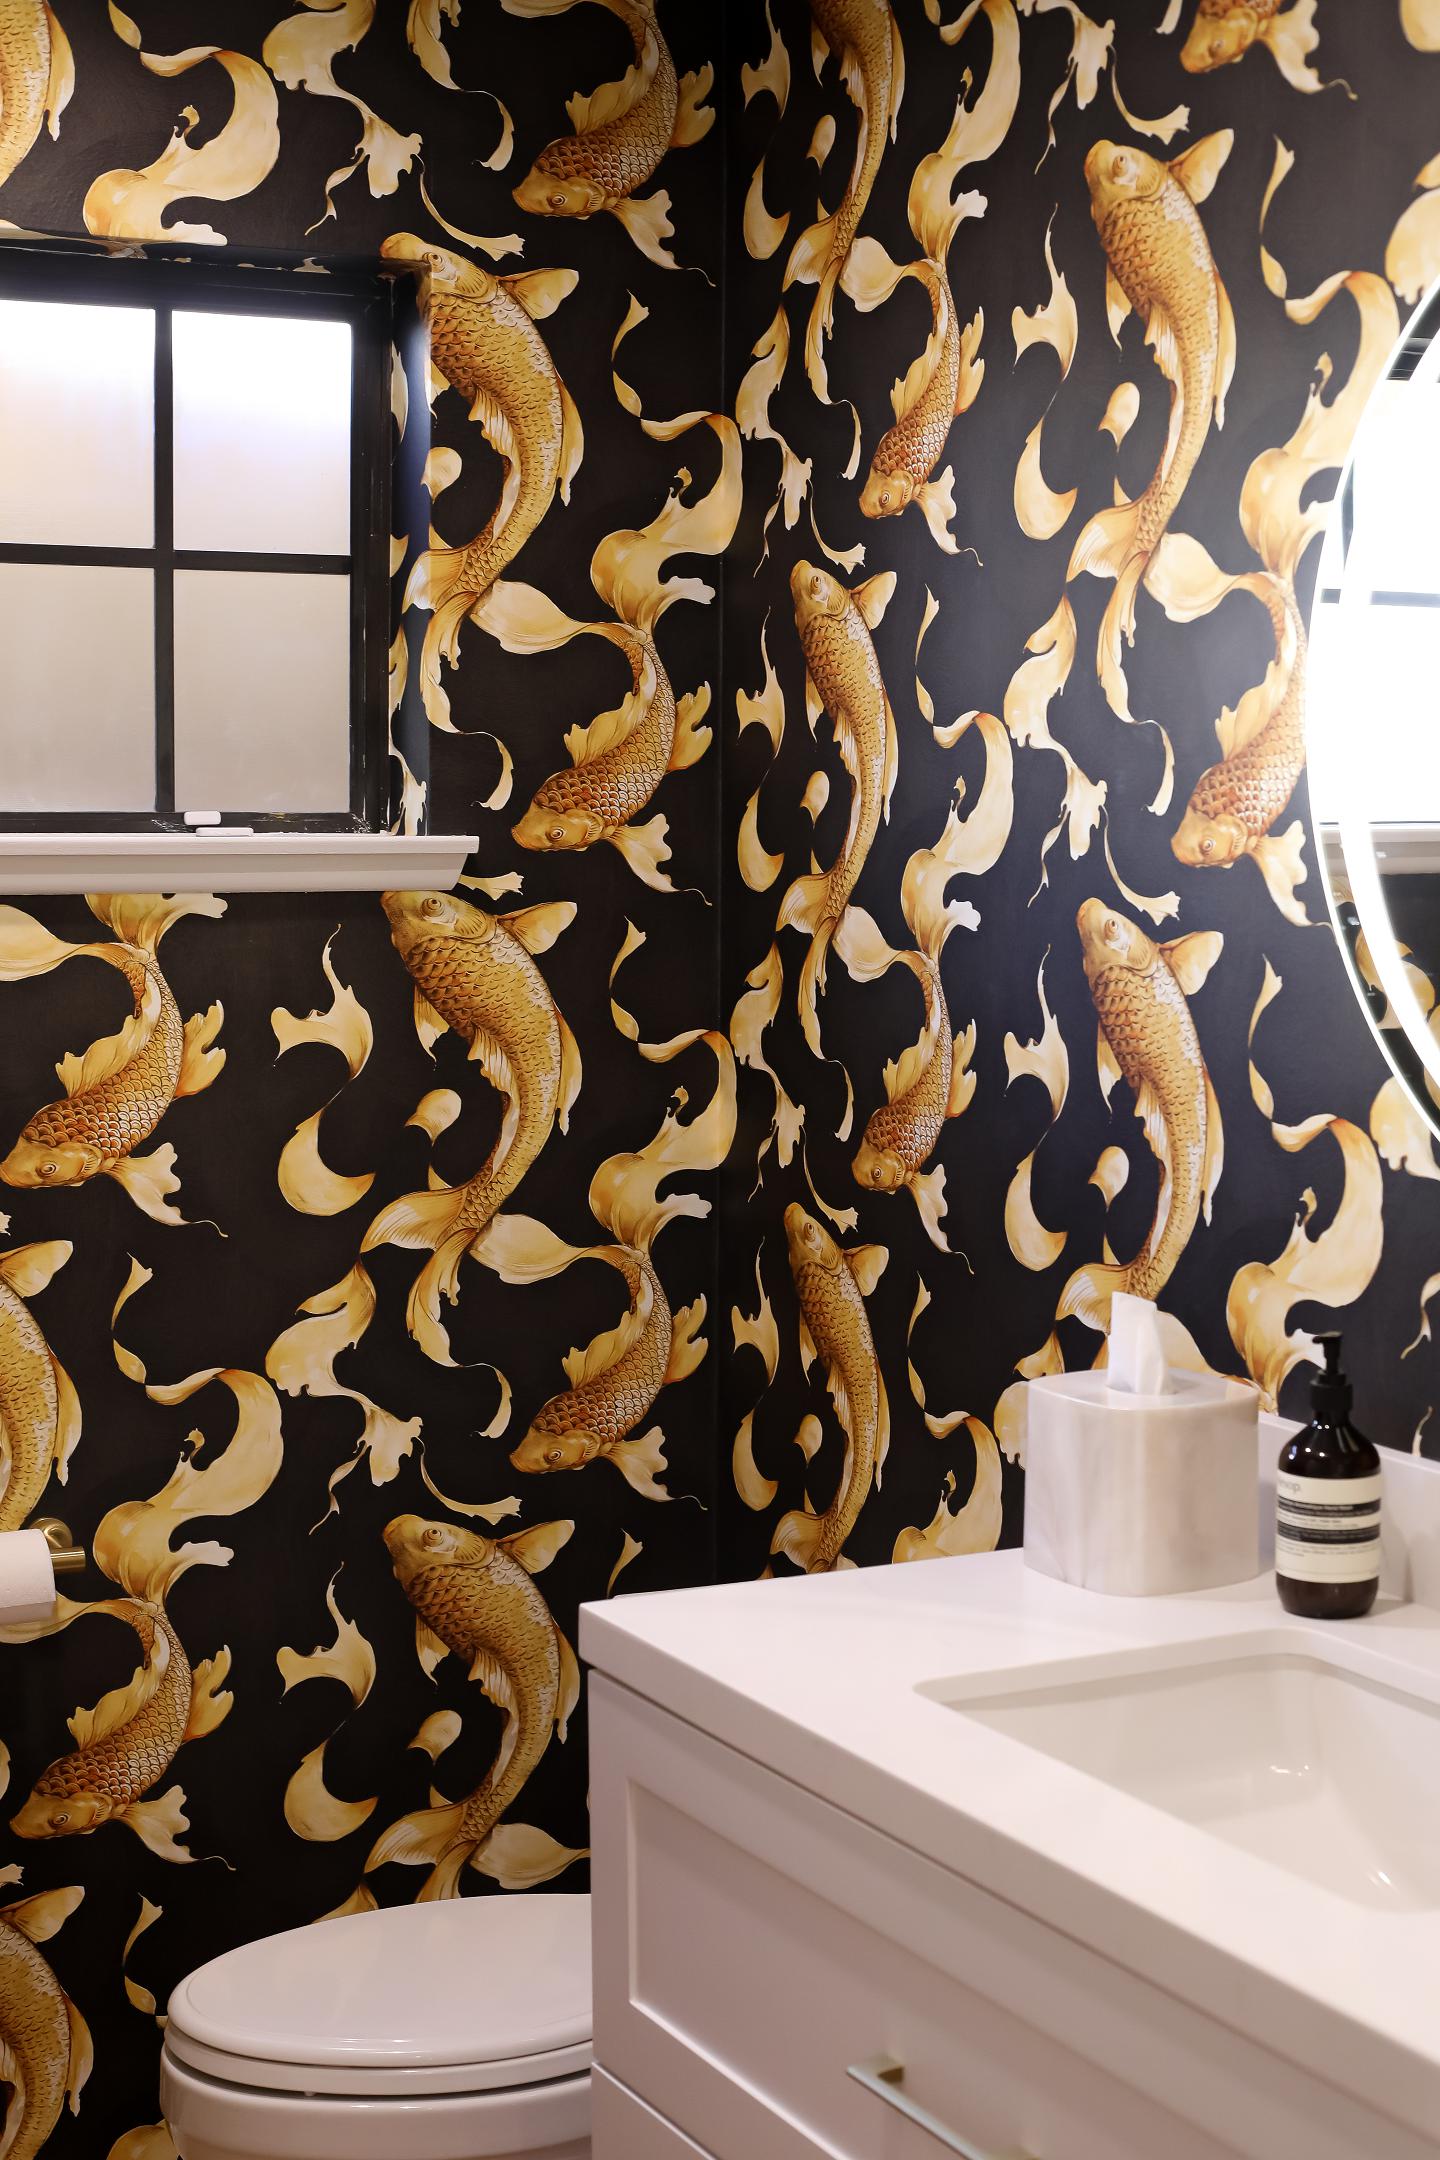 Koi fish pattern wallpaper in stylish bathroom.